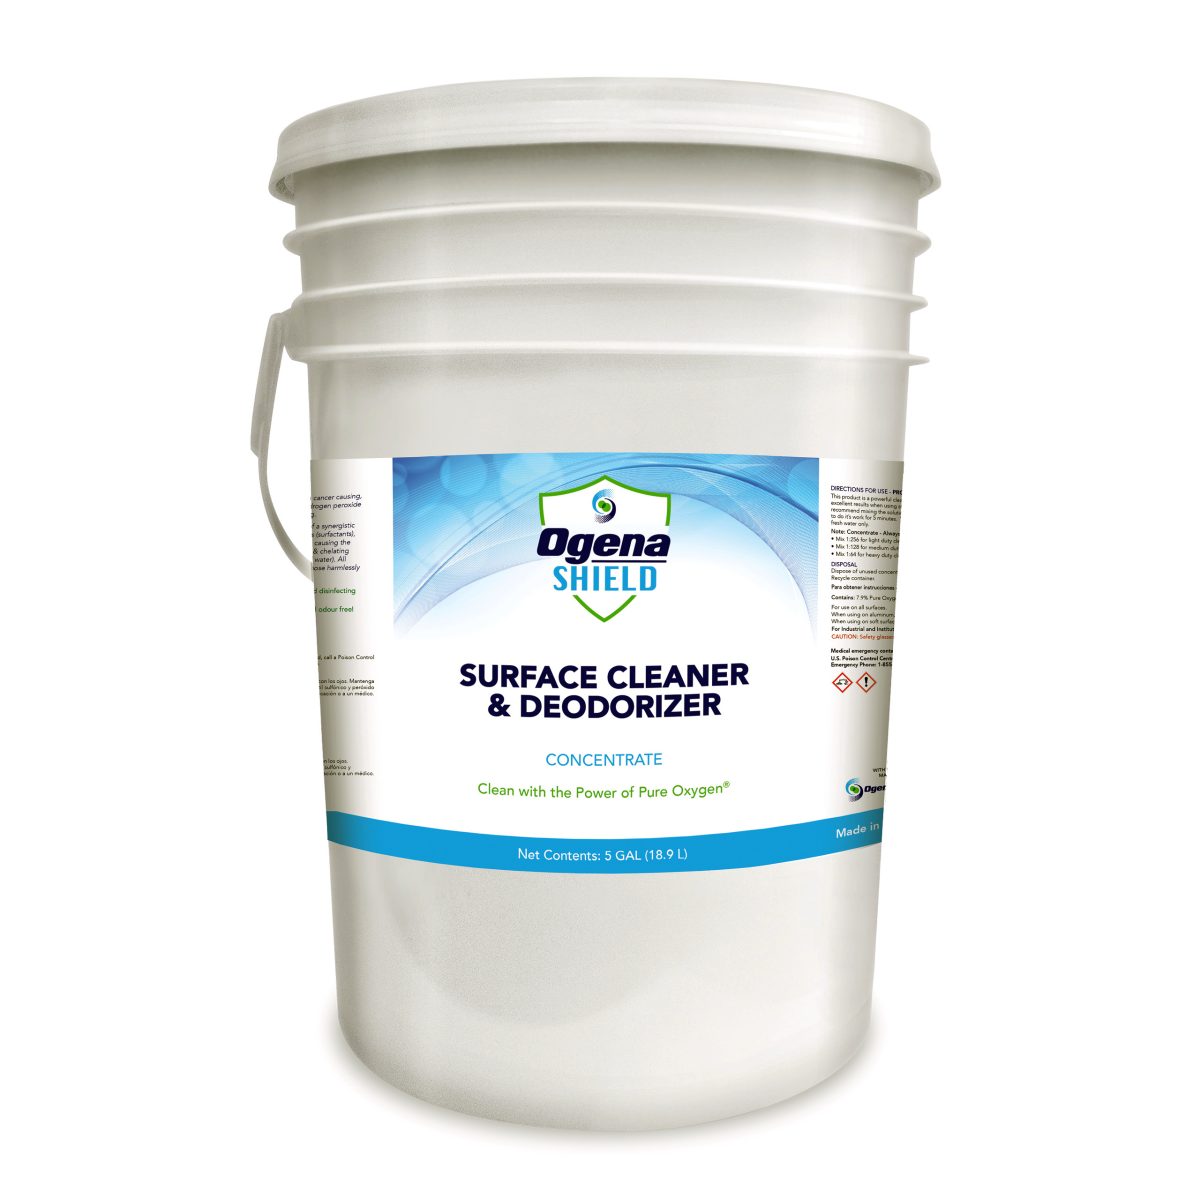 OgenaShield Surface Cleaner & Deodorizer